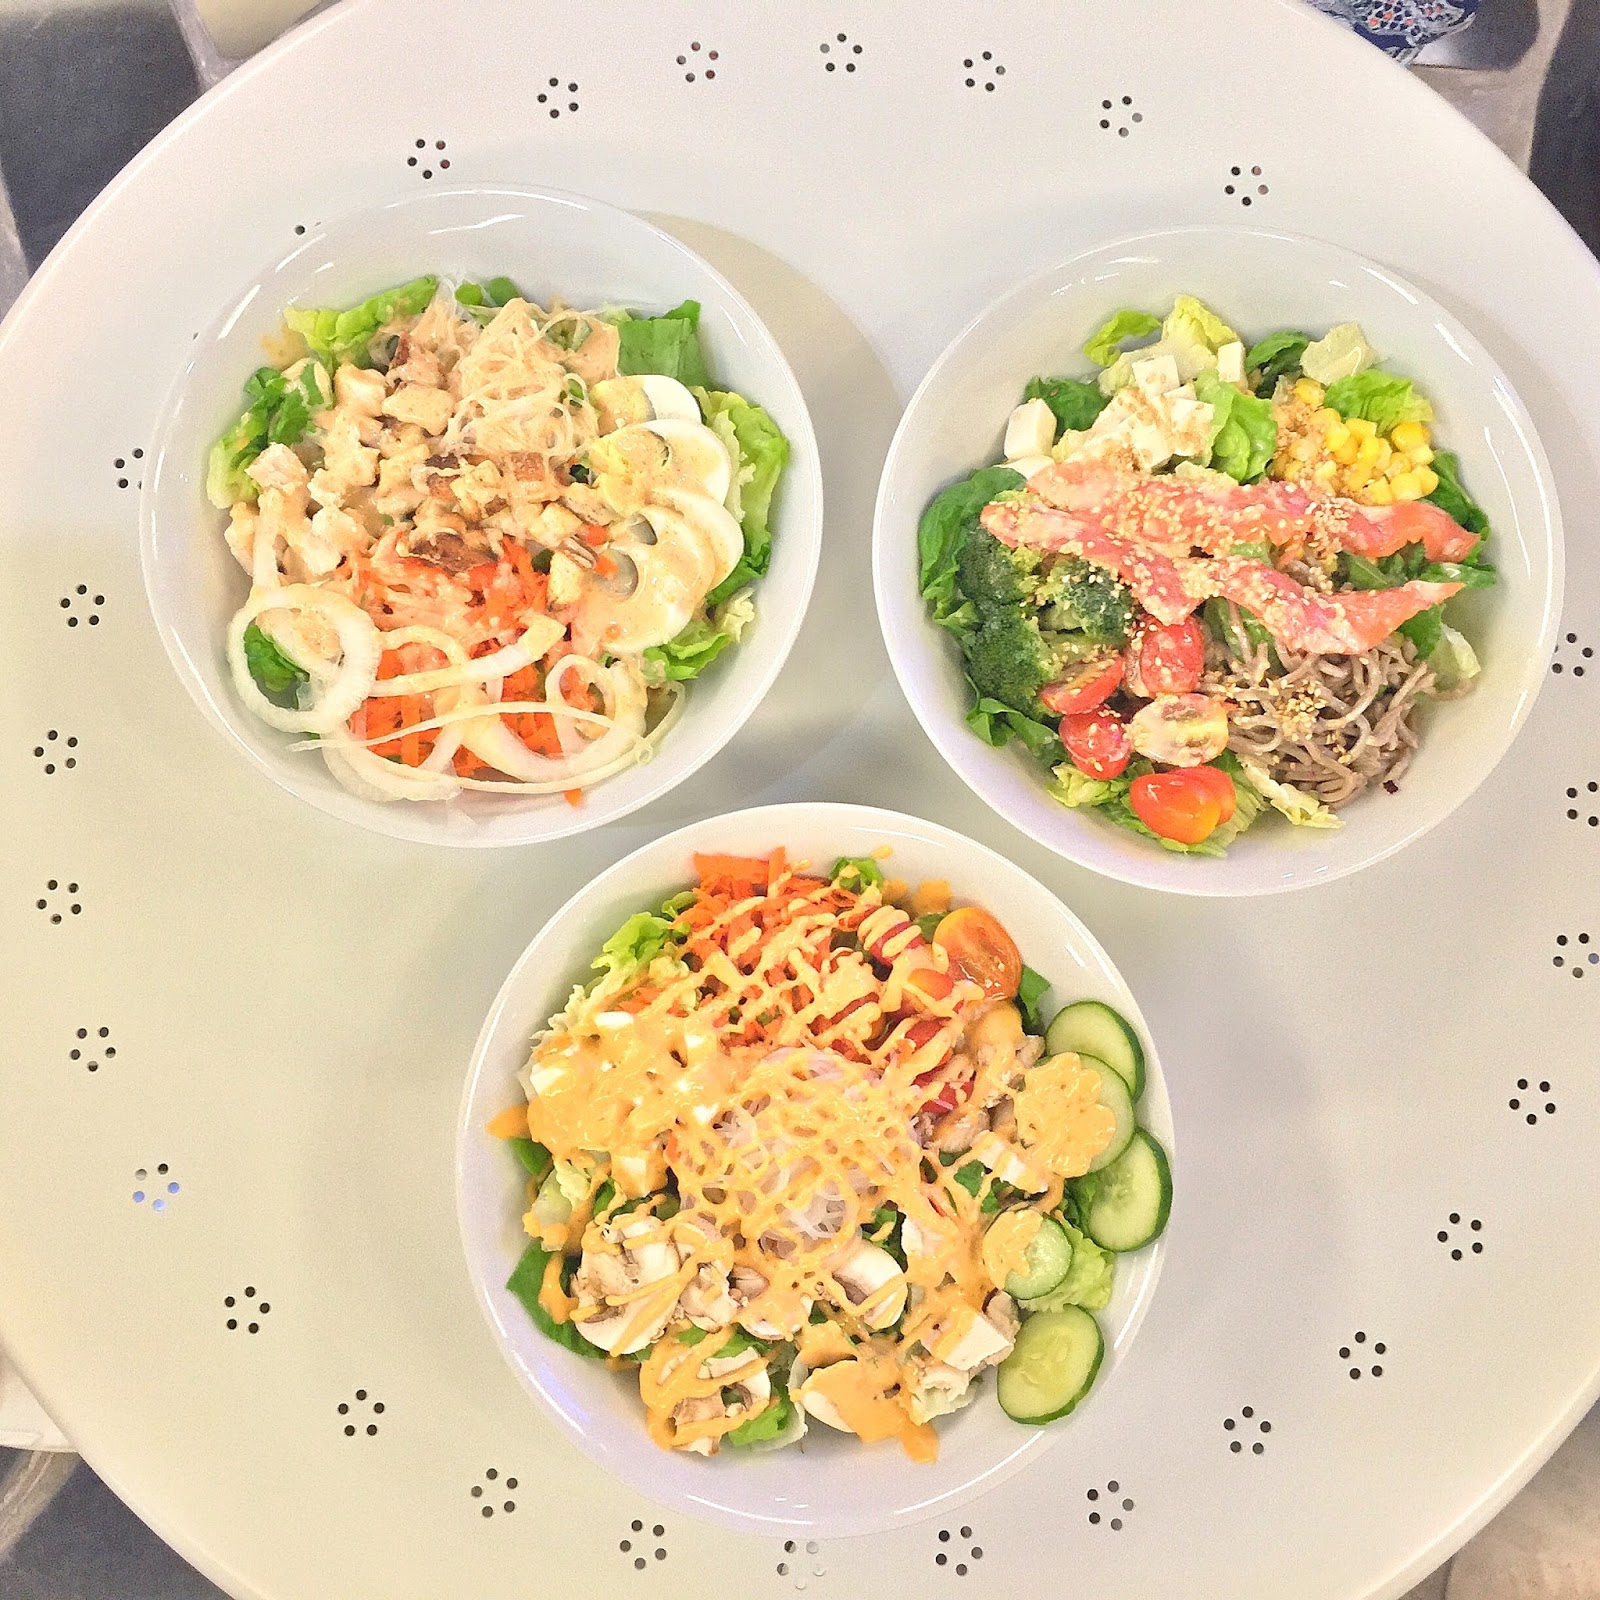 Green Rabbit Crepe & Salad Gastrobar - Salads